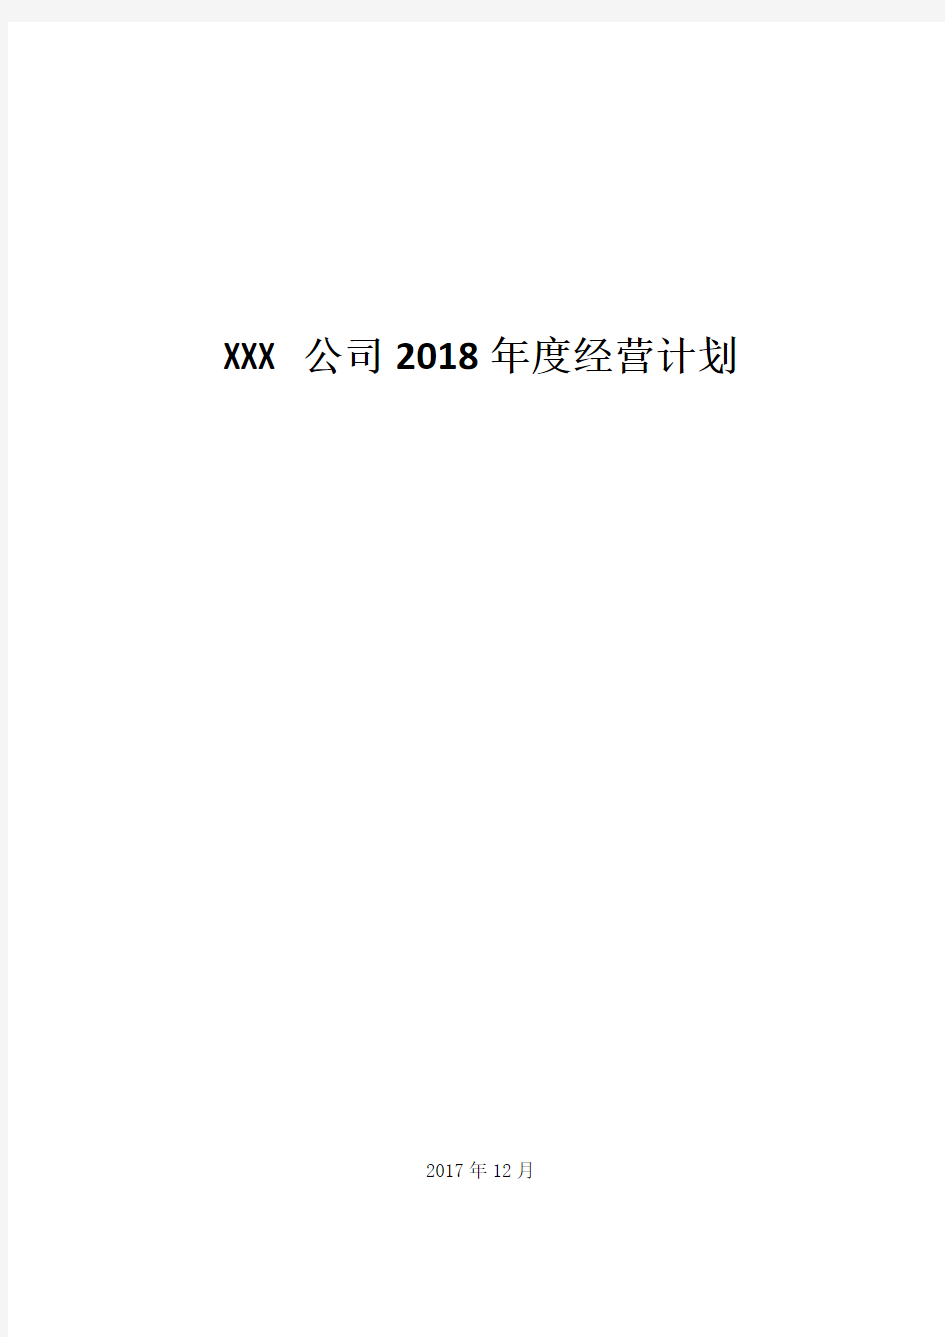 XXX公司年度经营计划(模板)